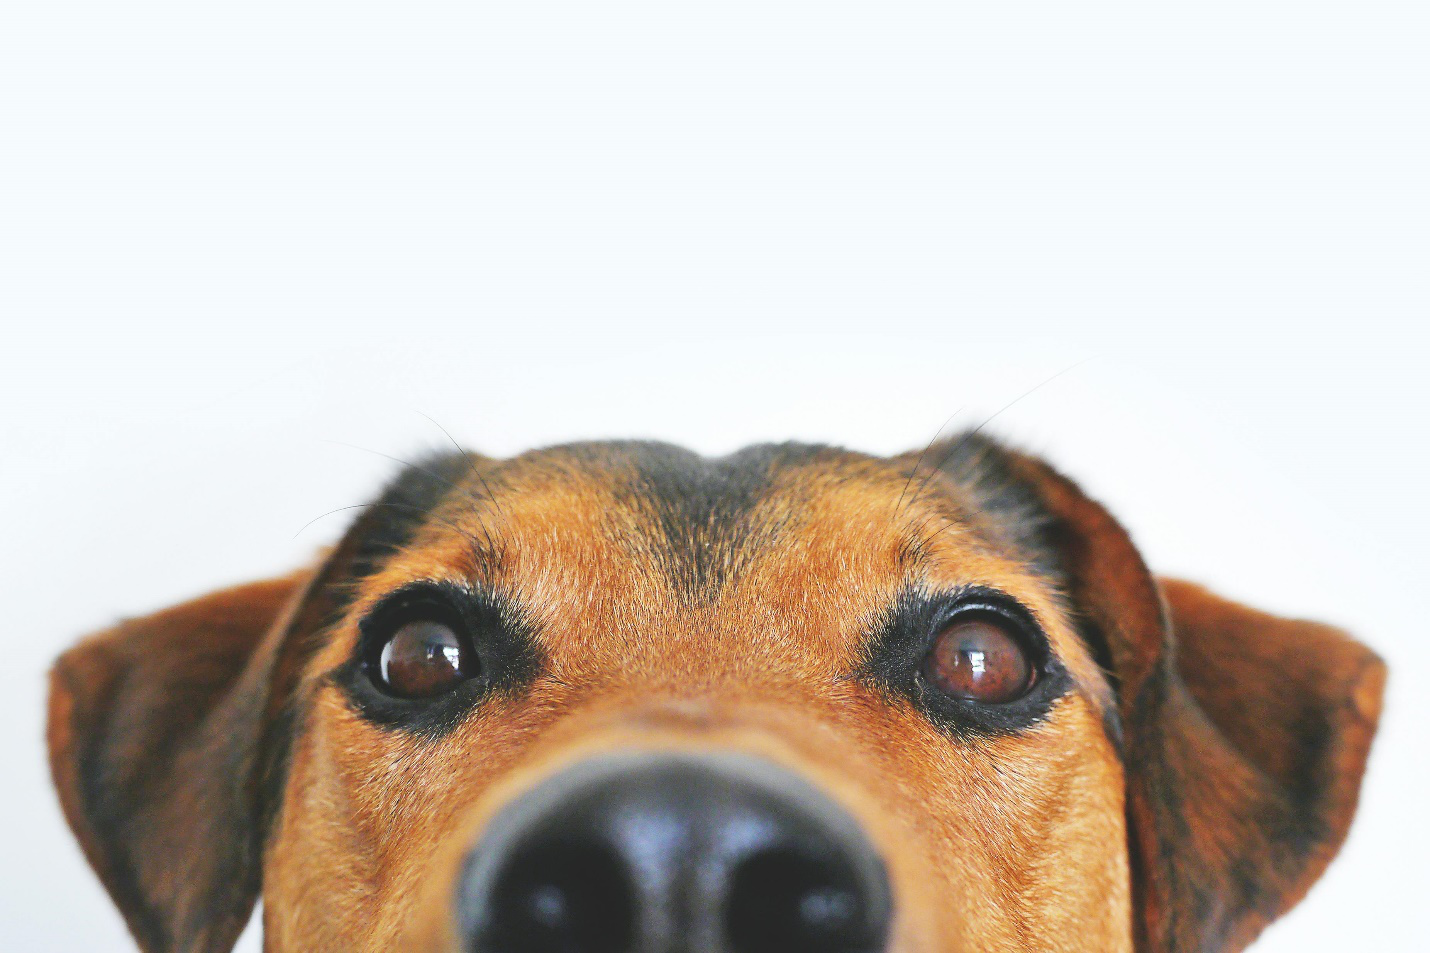 a close-up image of a dog’s eyes